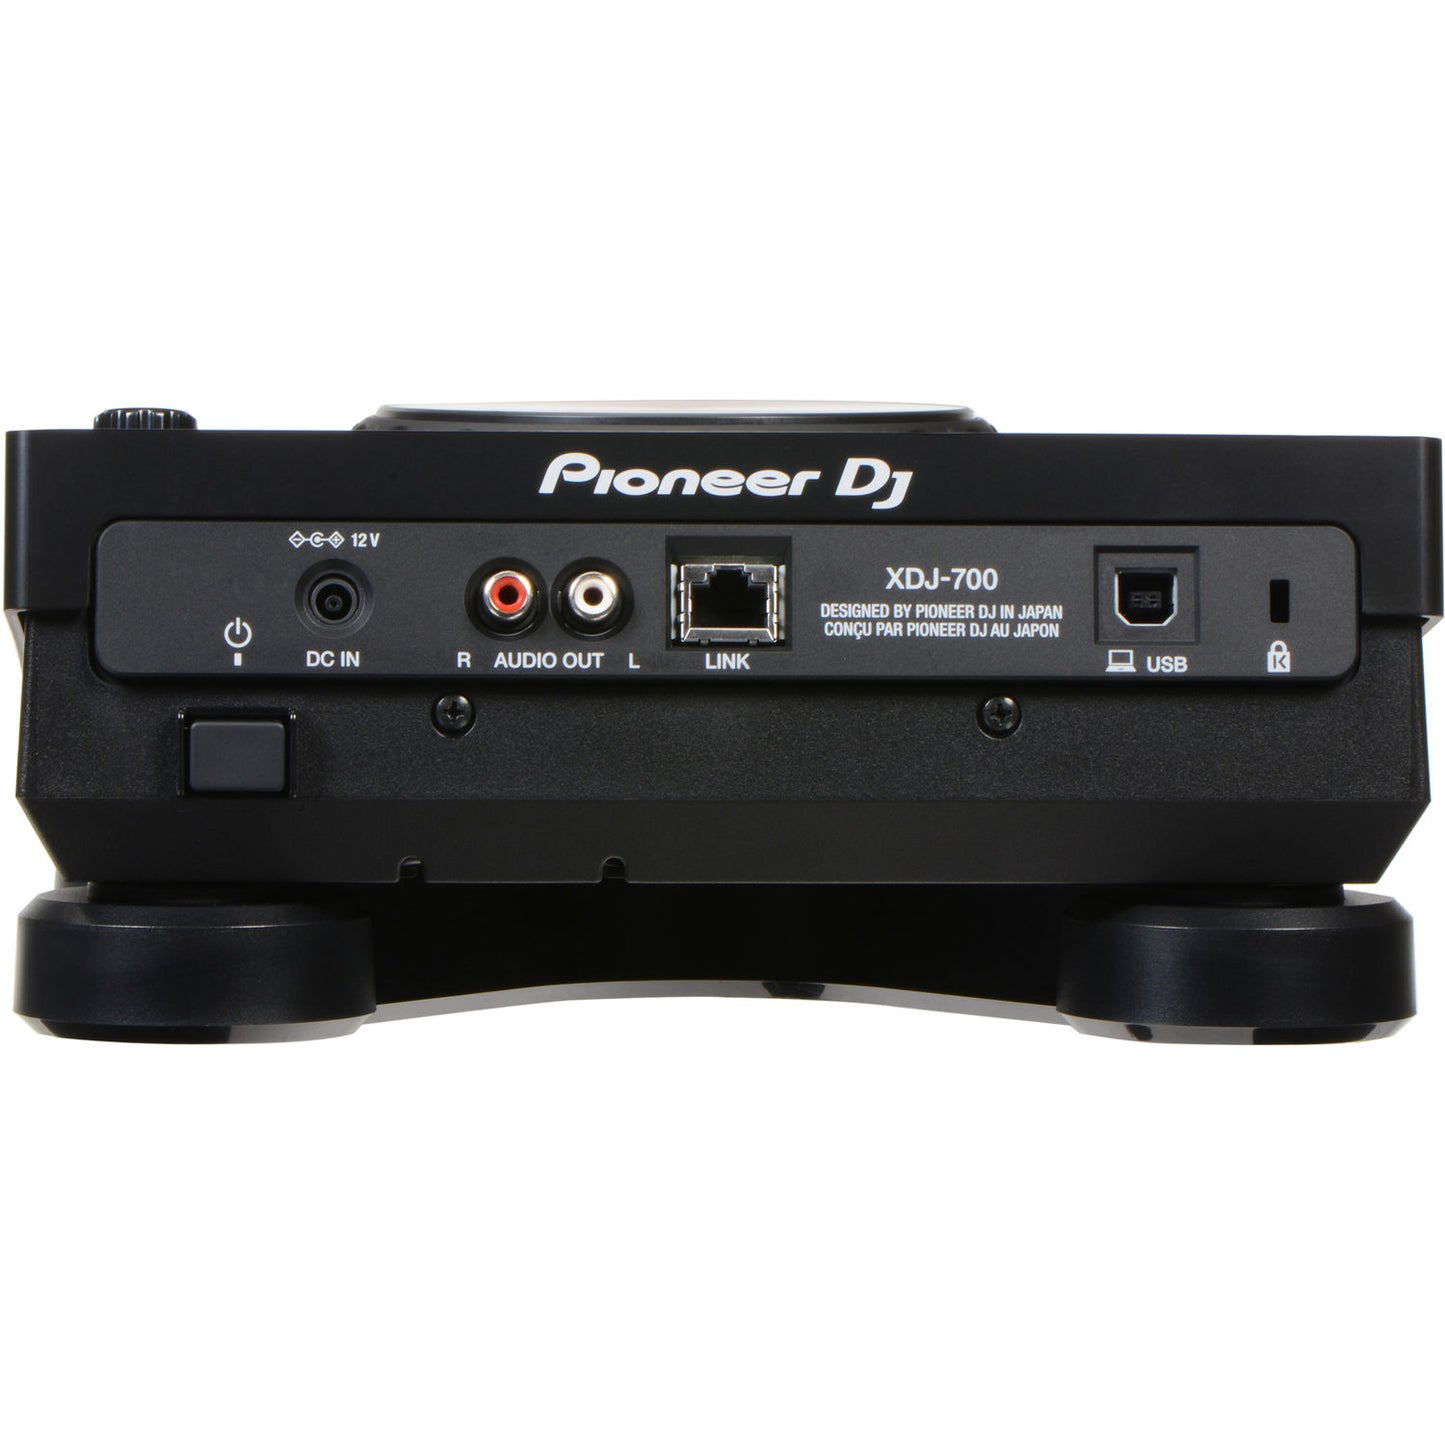 Pioneer XDJ700 Multi Player